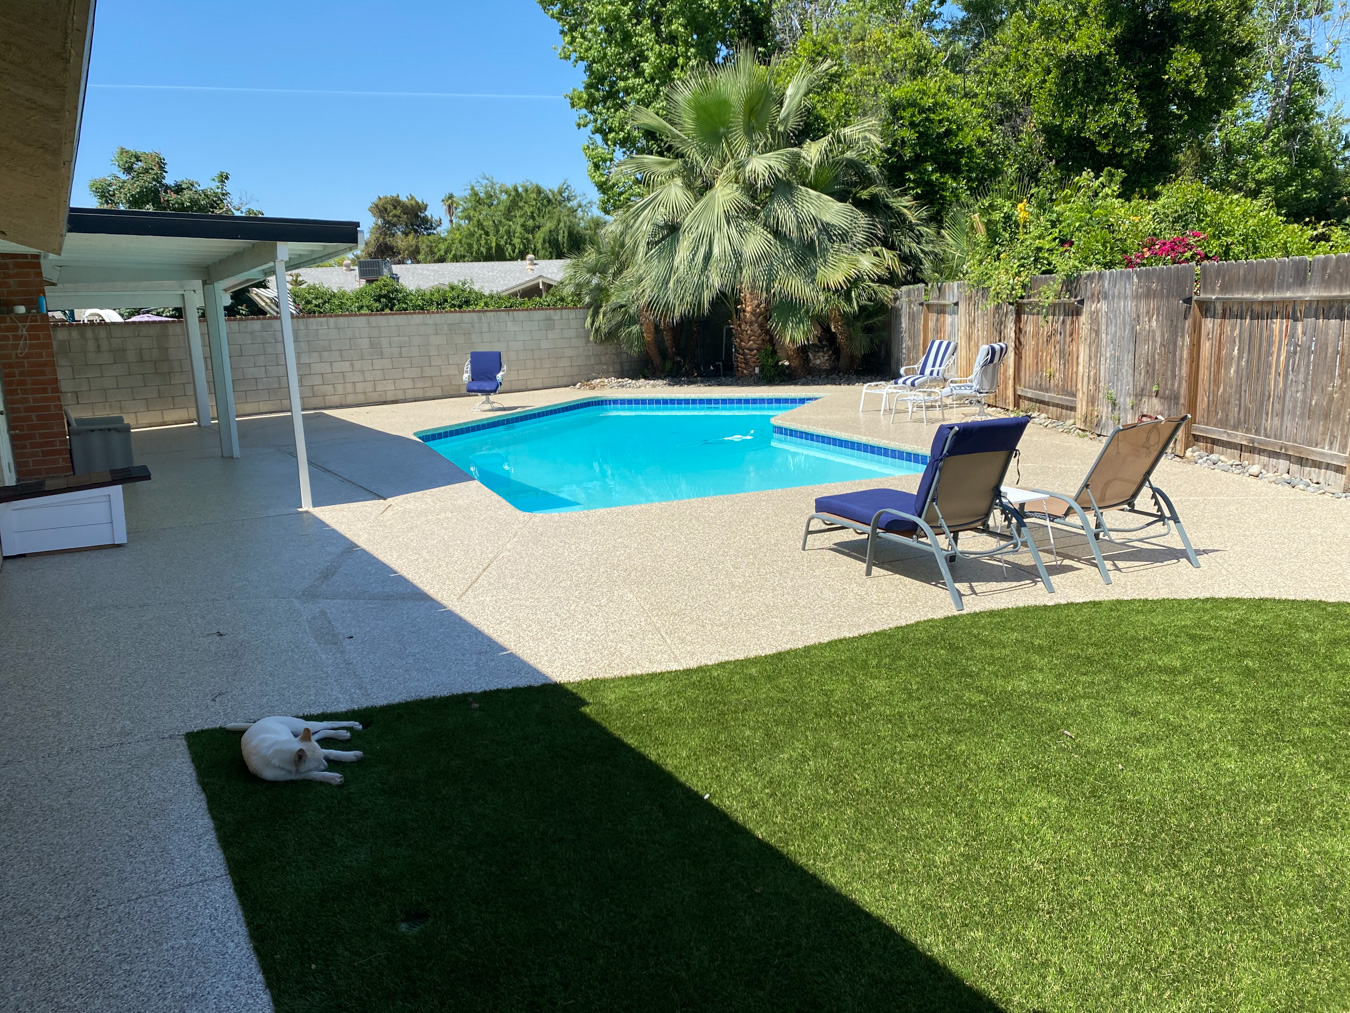 Pool with tan concrete epoxy coating